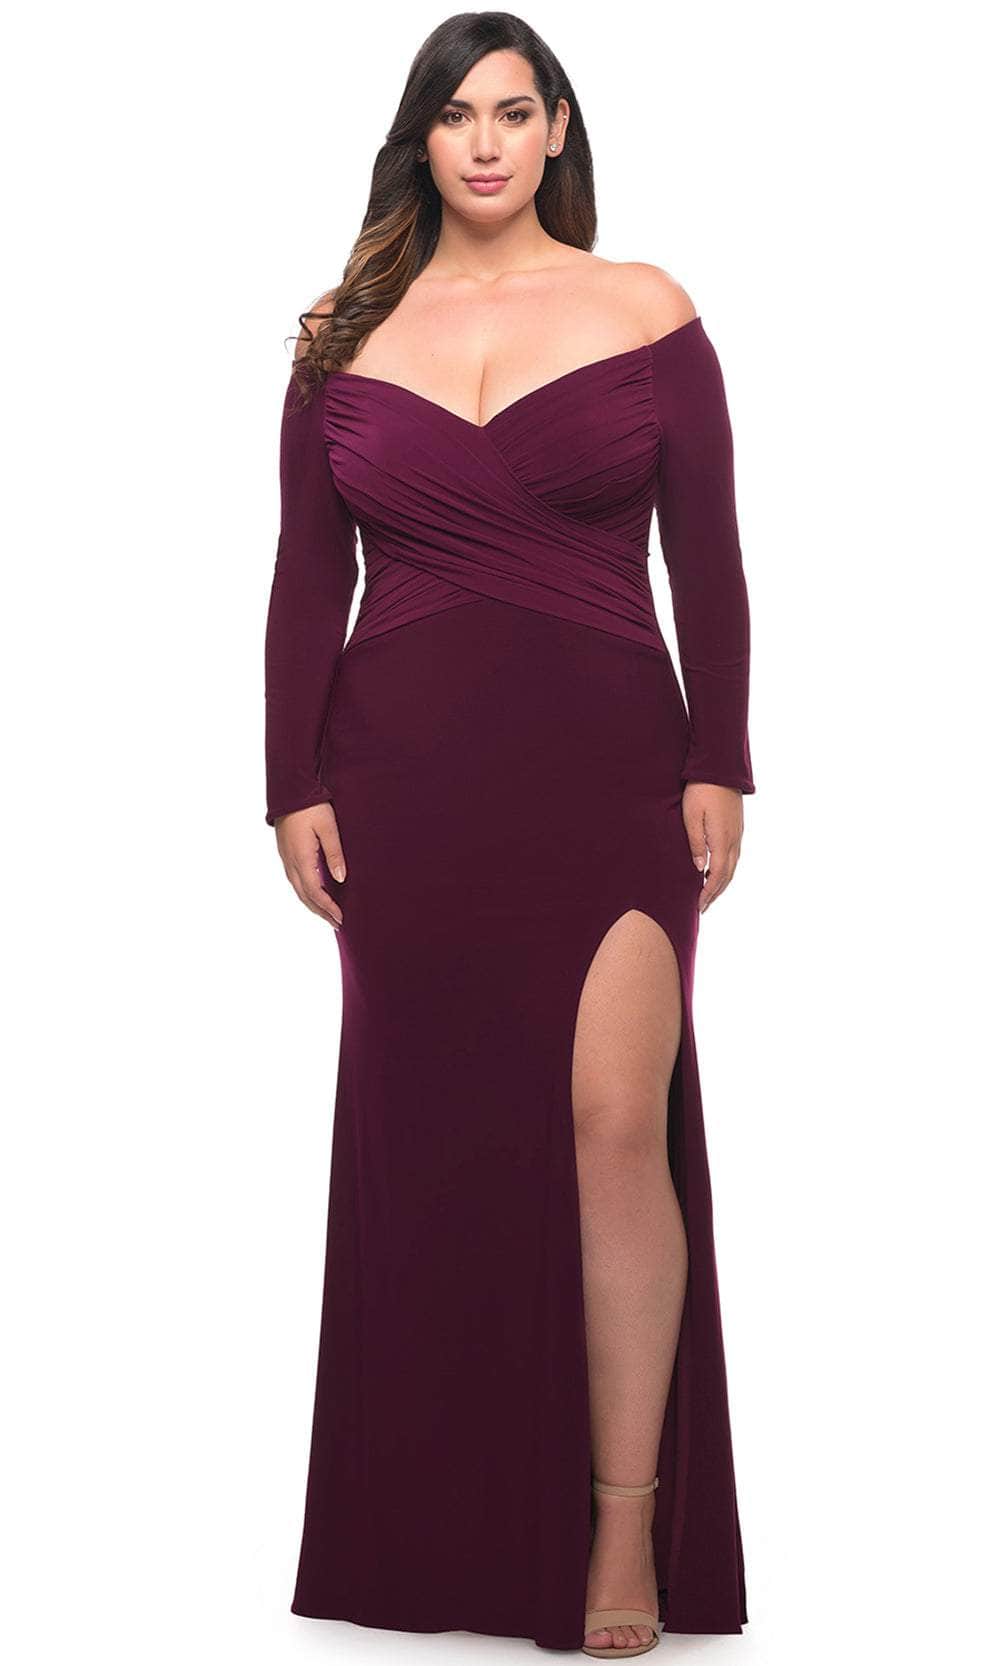 La Femme 29530 - Off Shoulder Long Sleeved Prom Dress Special Occasion Dress 12W / Dark Berry